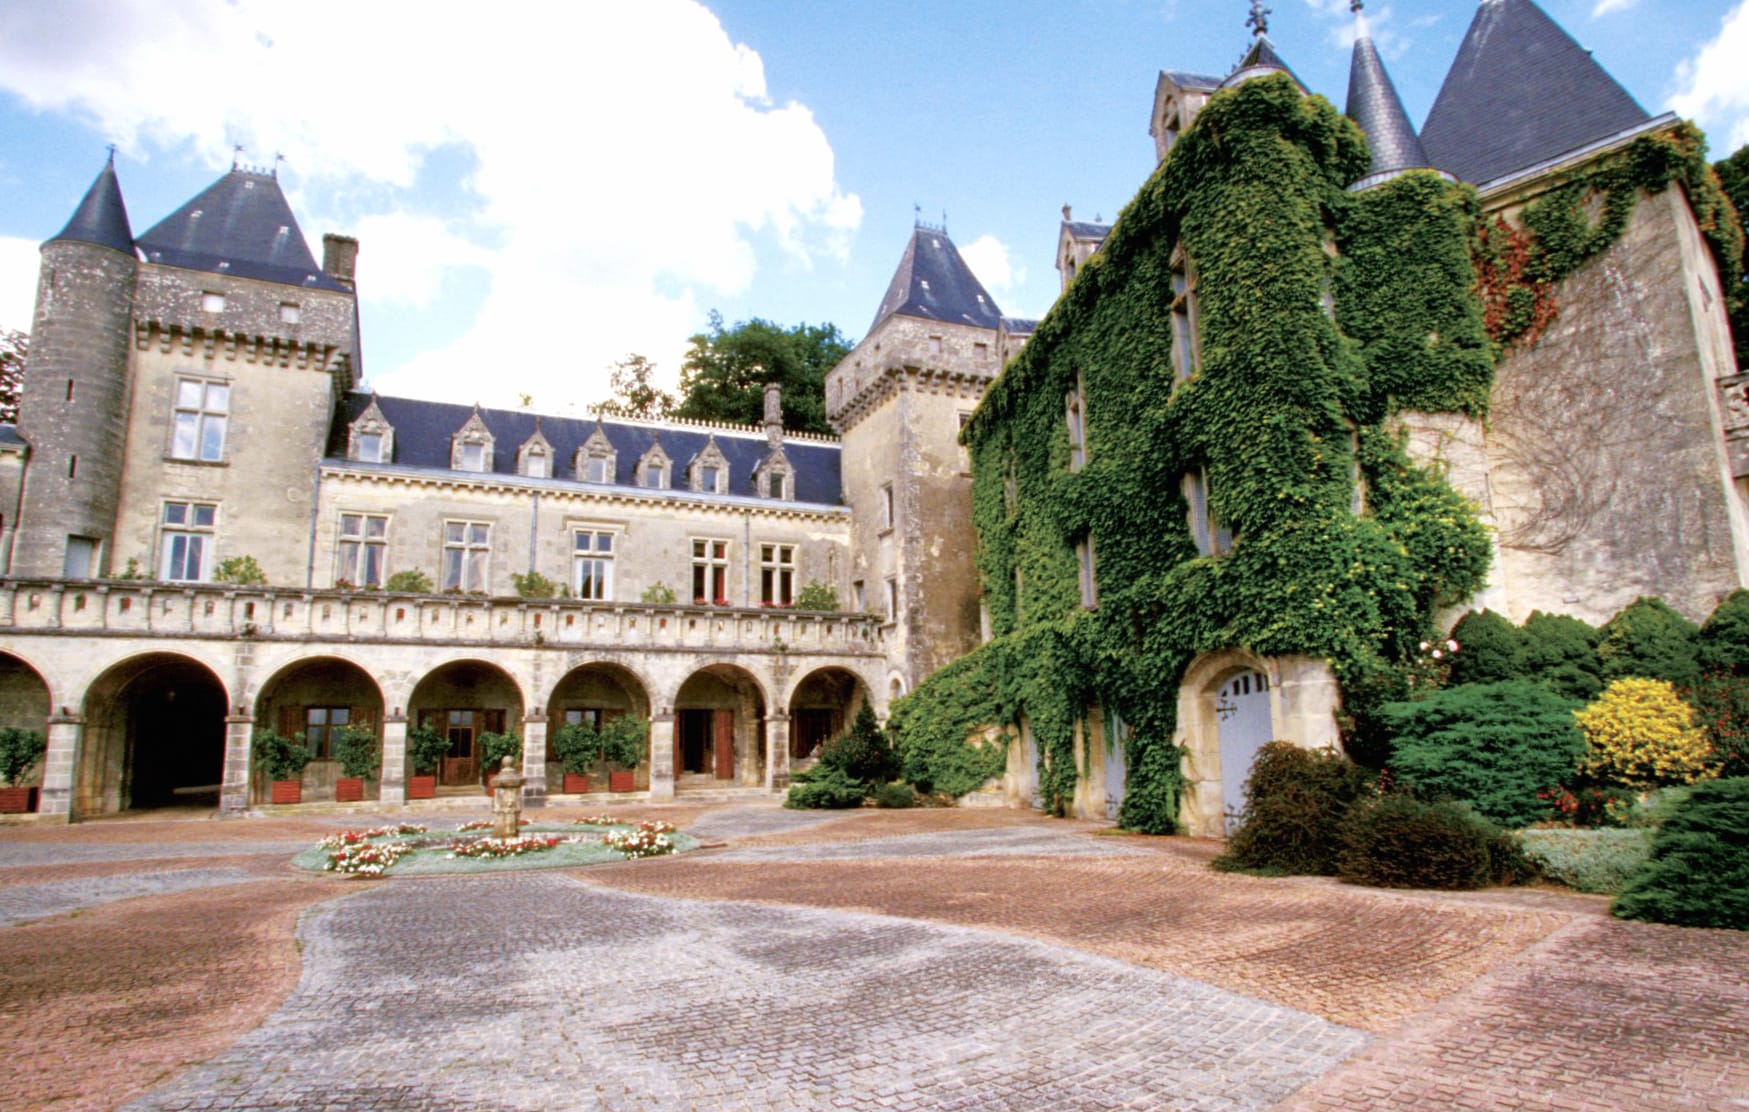 Chateau de La Riviere-Bourdet at 1024 x 768 size wallpapers HD quality